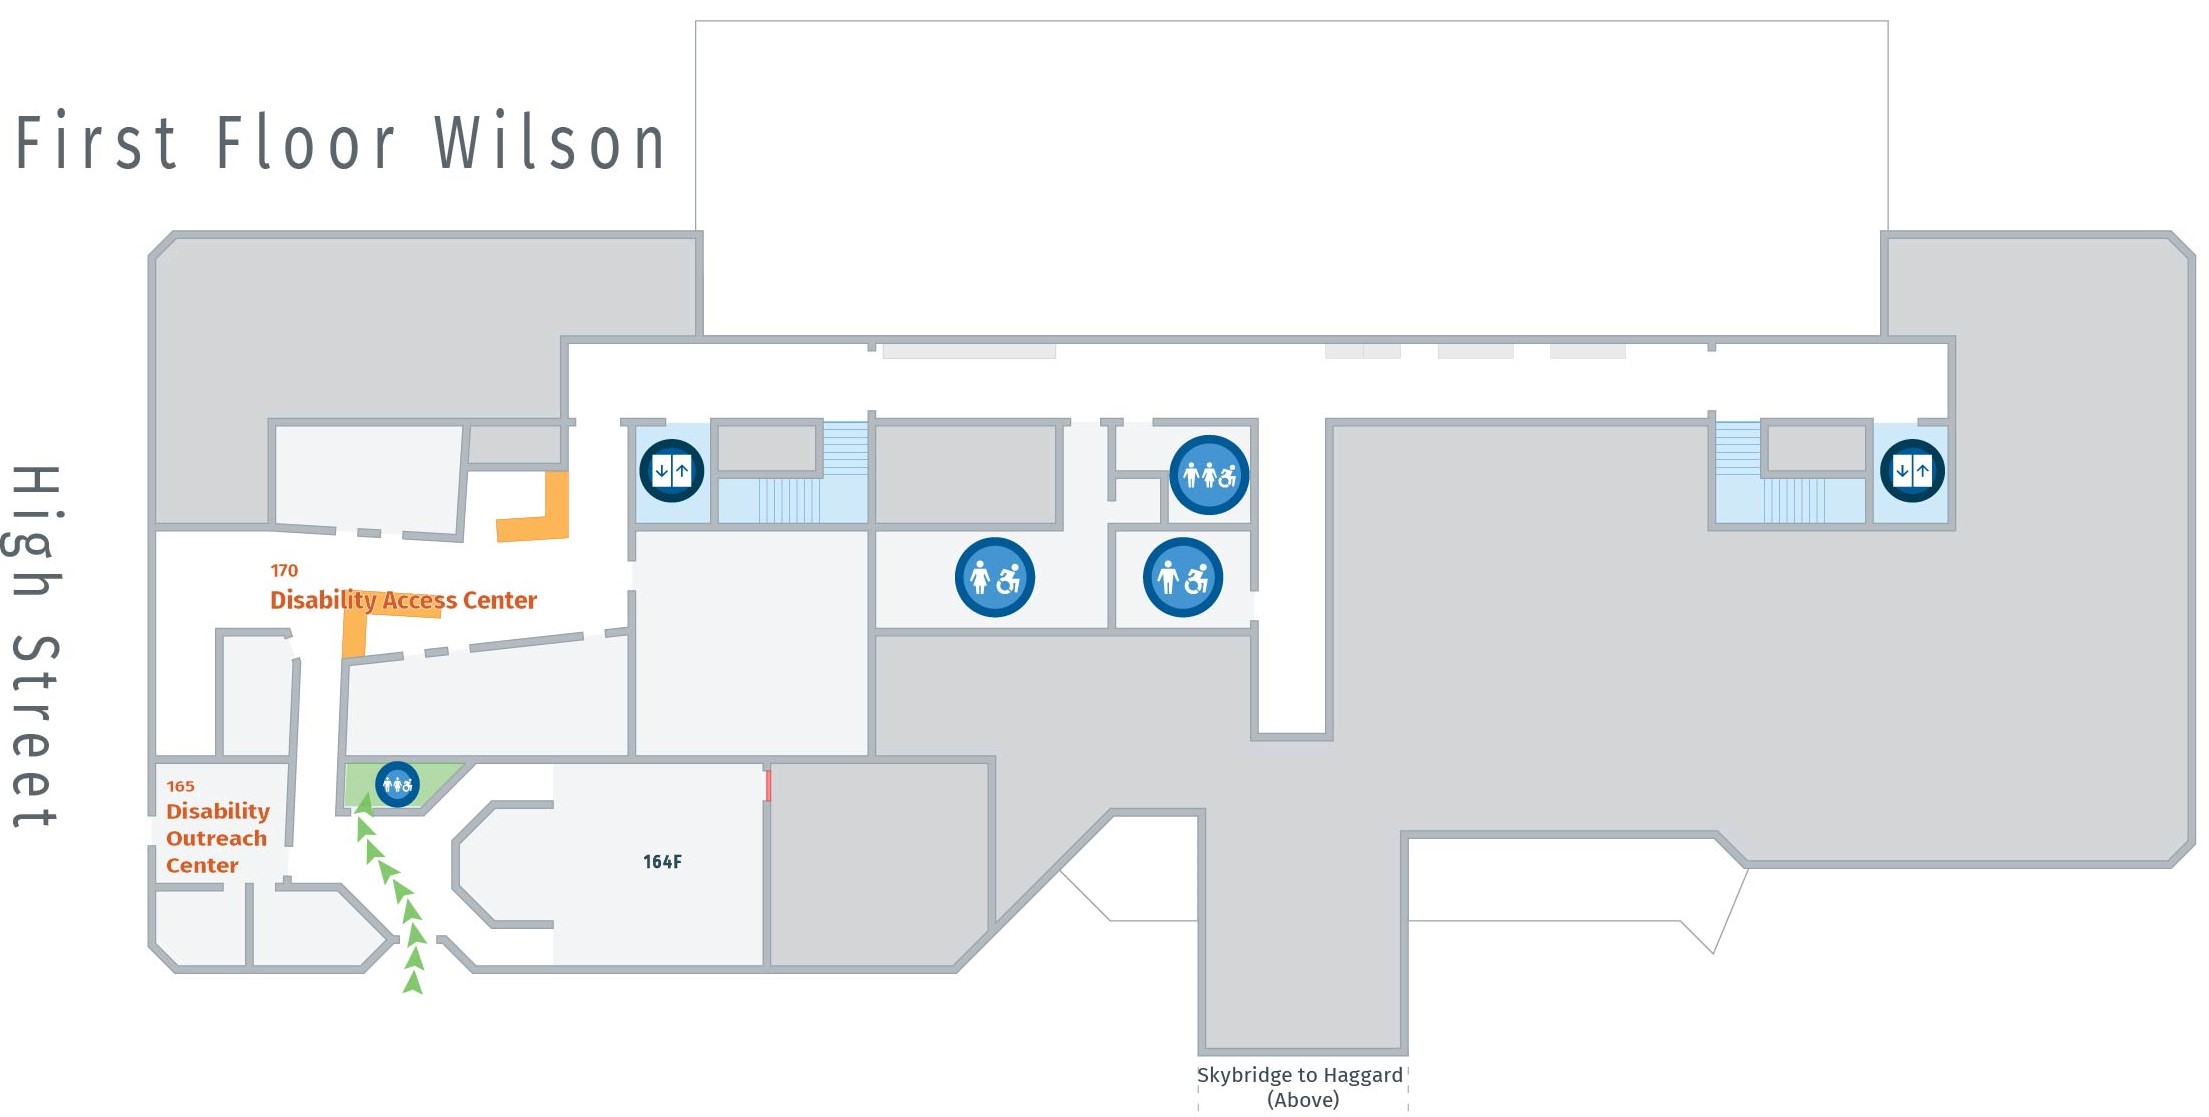 Floorplan, first floor of Wilson with path to gender neutral restroom. Wilson 164A.